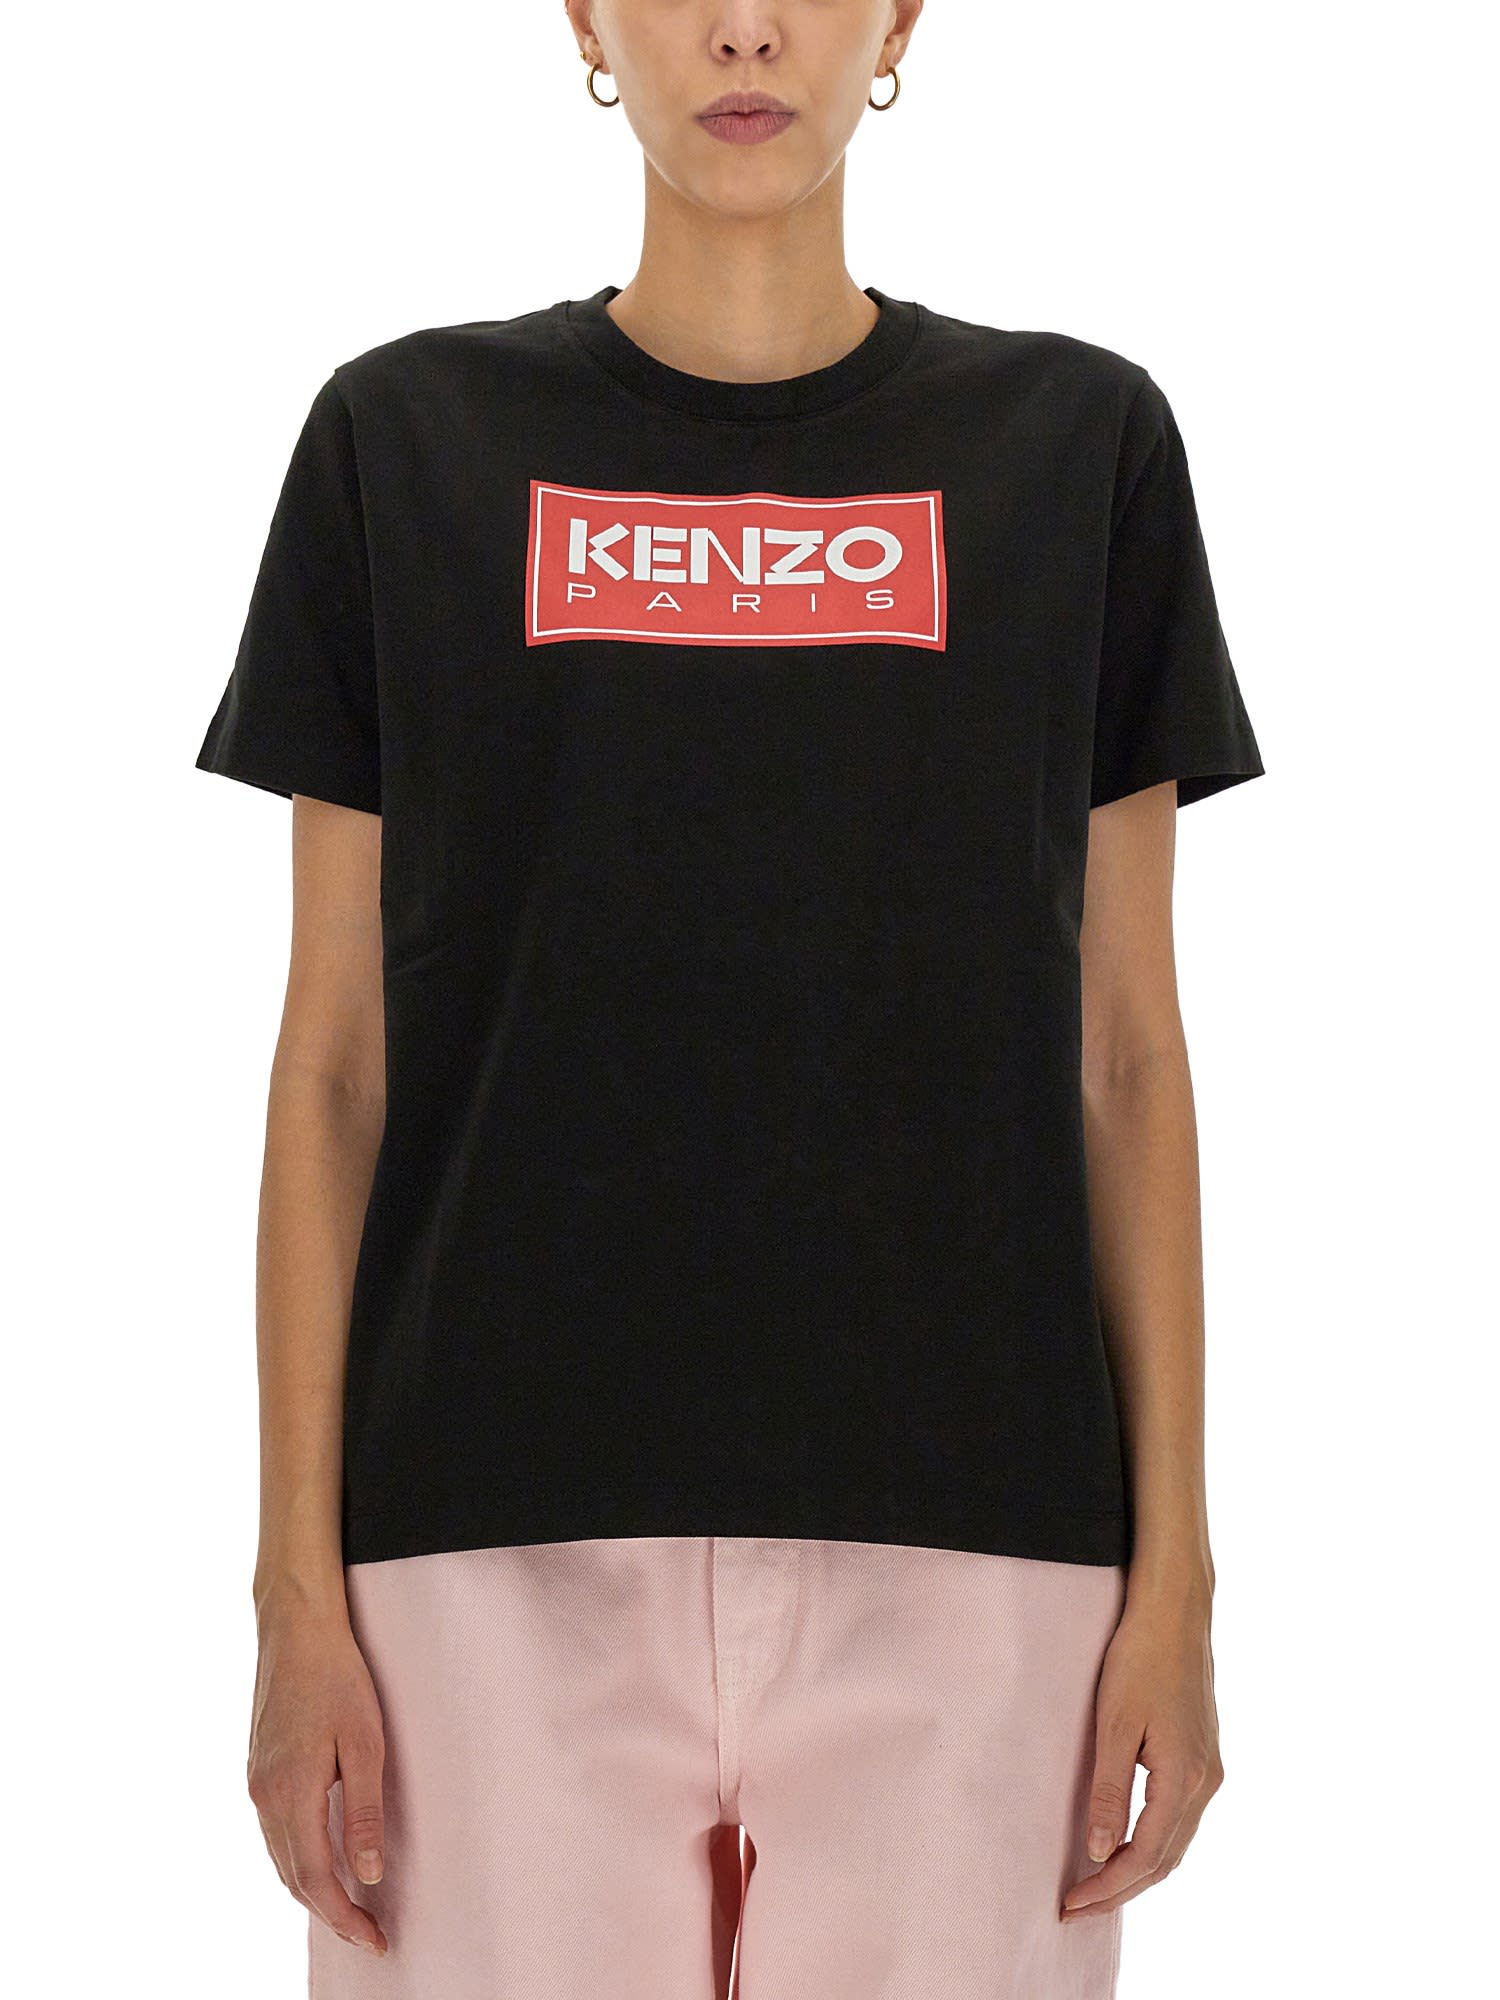 Kenzo T-shirt Paris